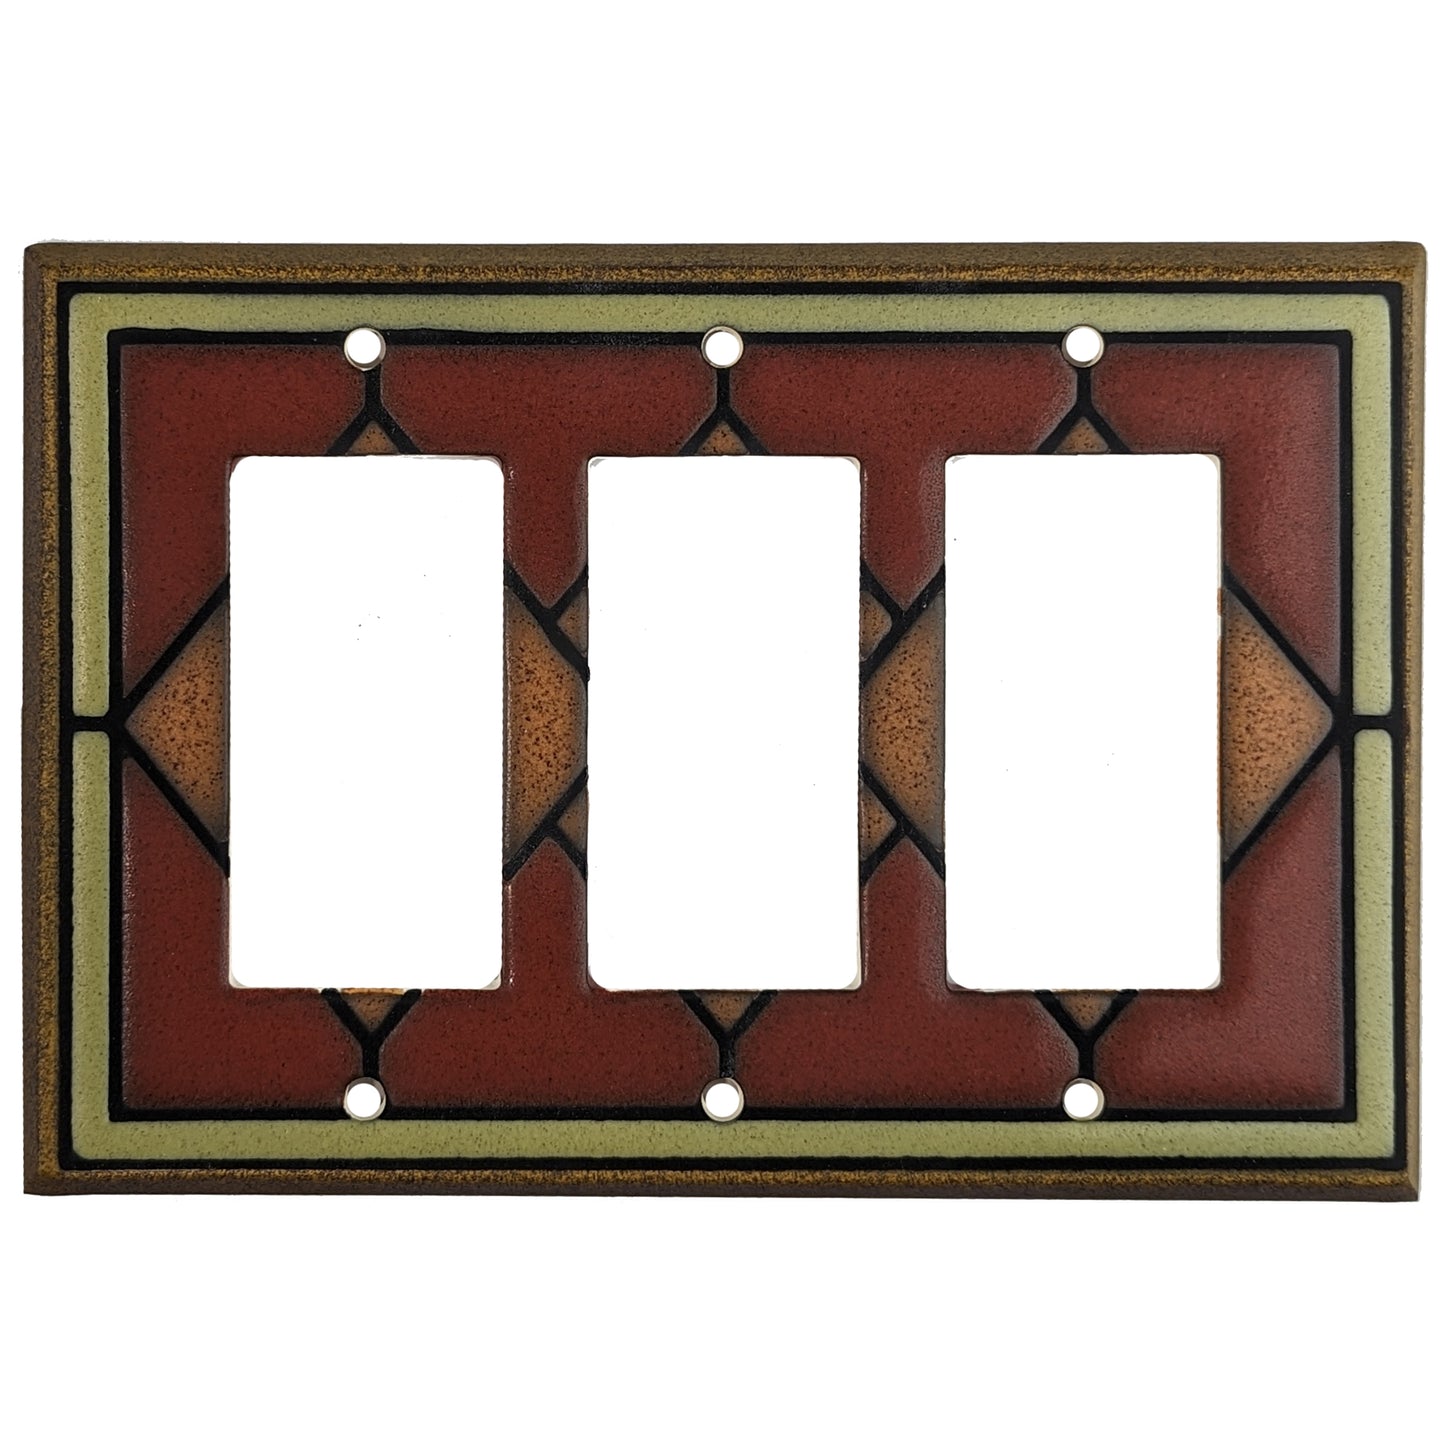 Rustic Tile Cover Plates 3 Rocker Wallplate